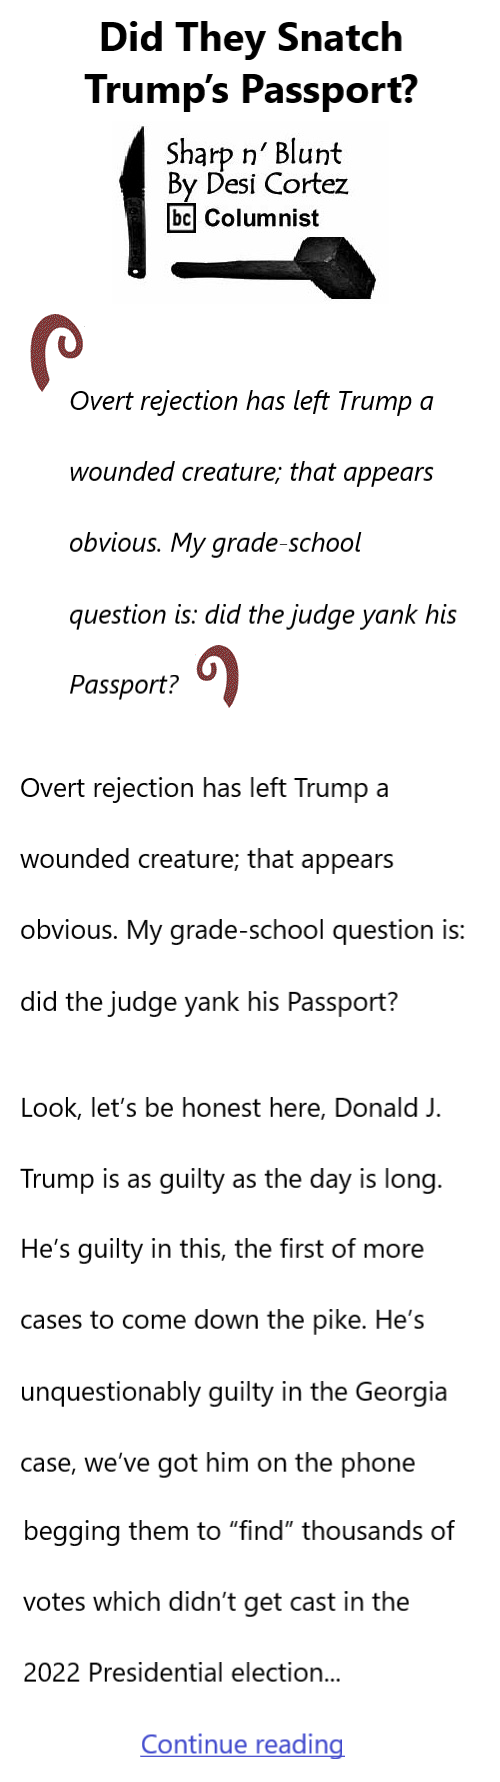 BlackCommentator.com Apr 6, 2023 - Issue 950: Did They Snatch Trump’s Passport? - Sharp n' Blunt By Desi Cortez, BC Columnist